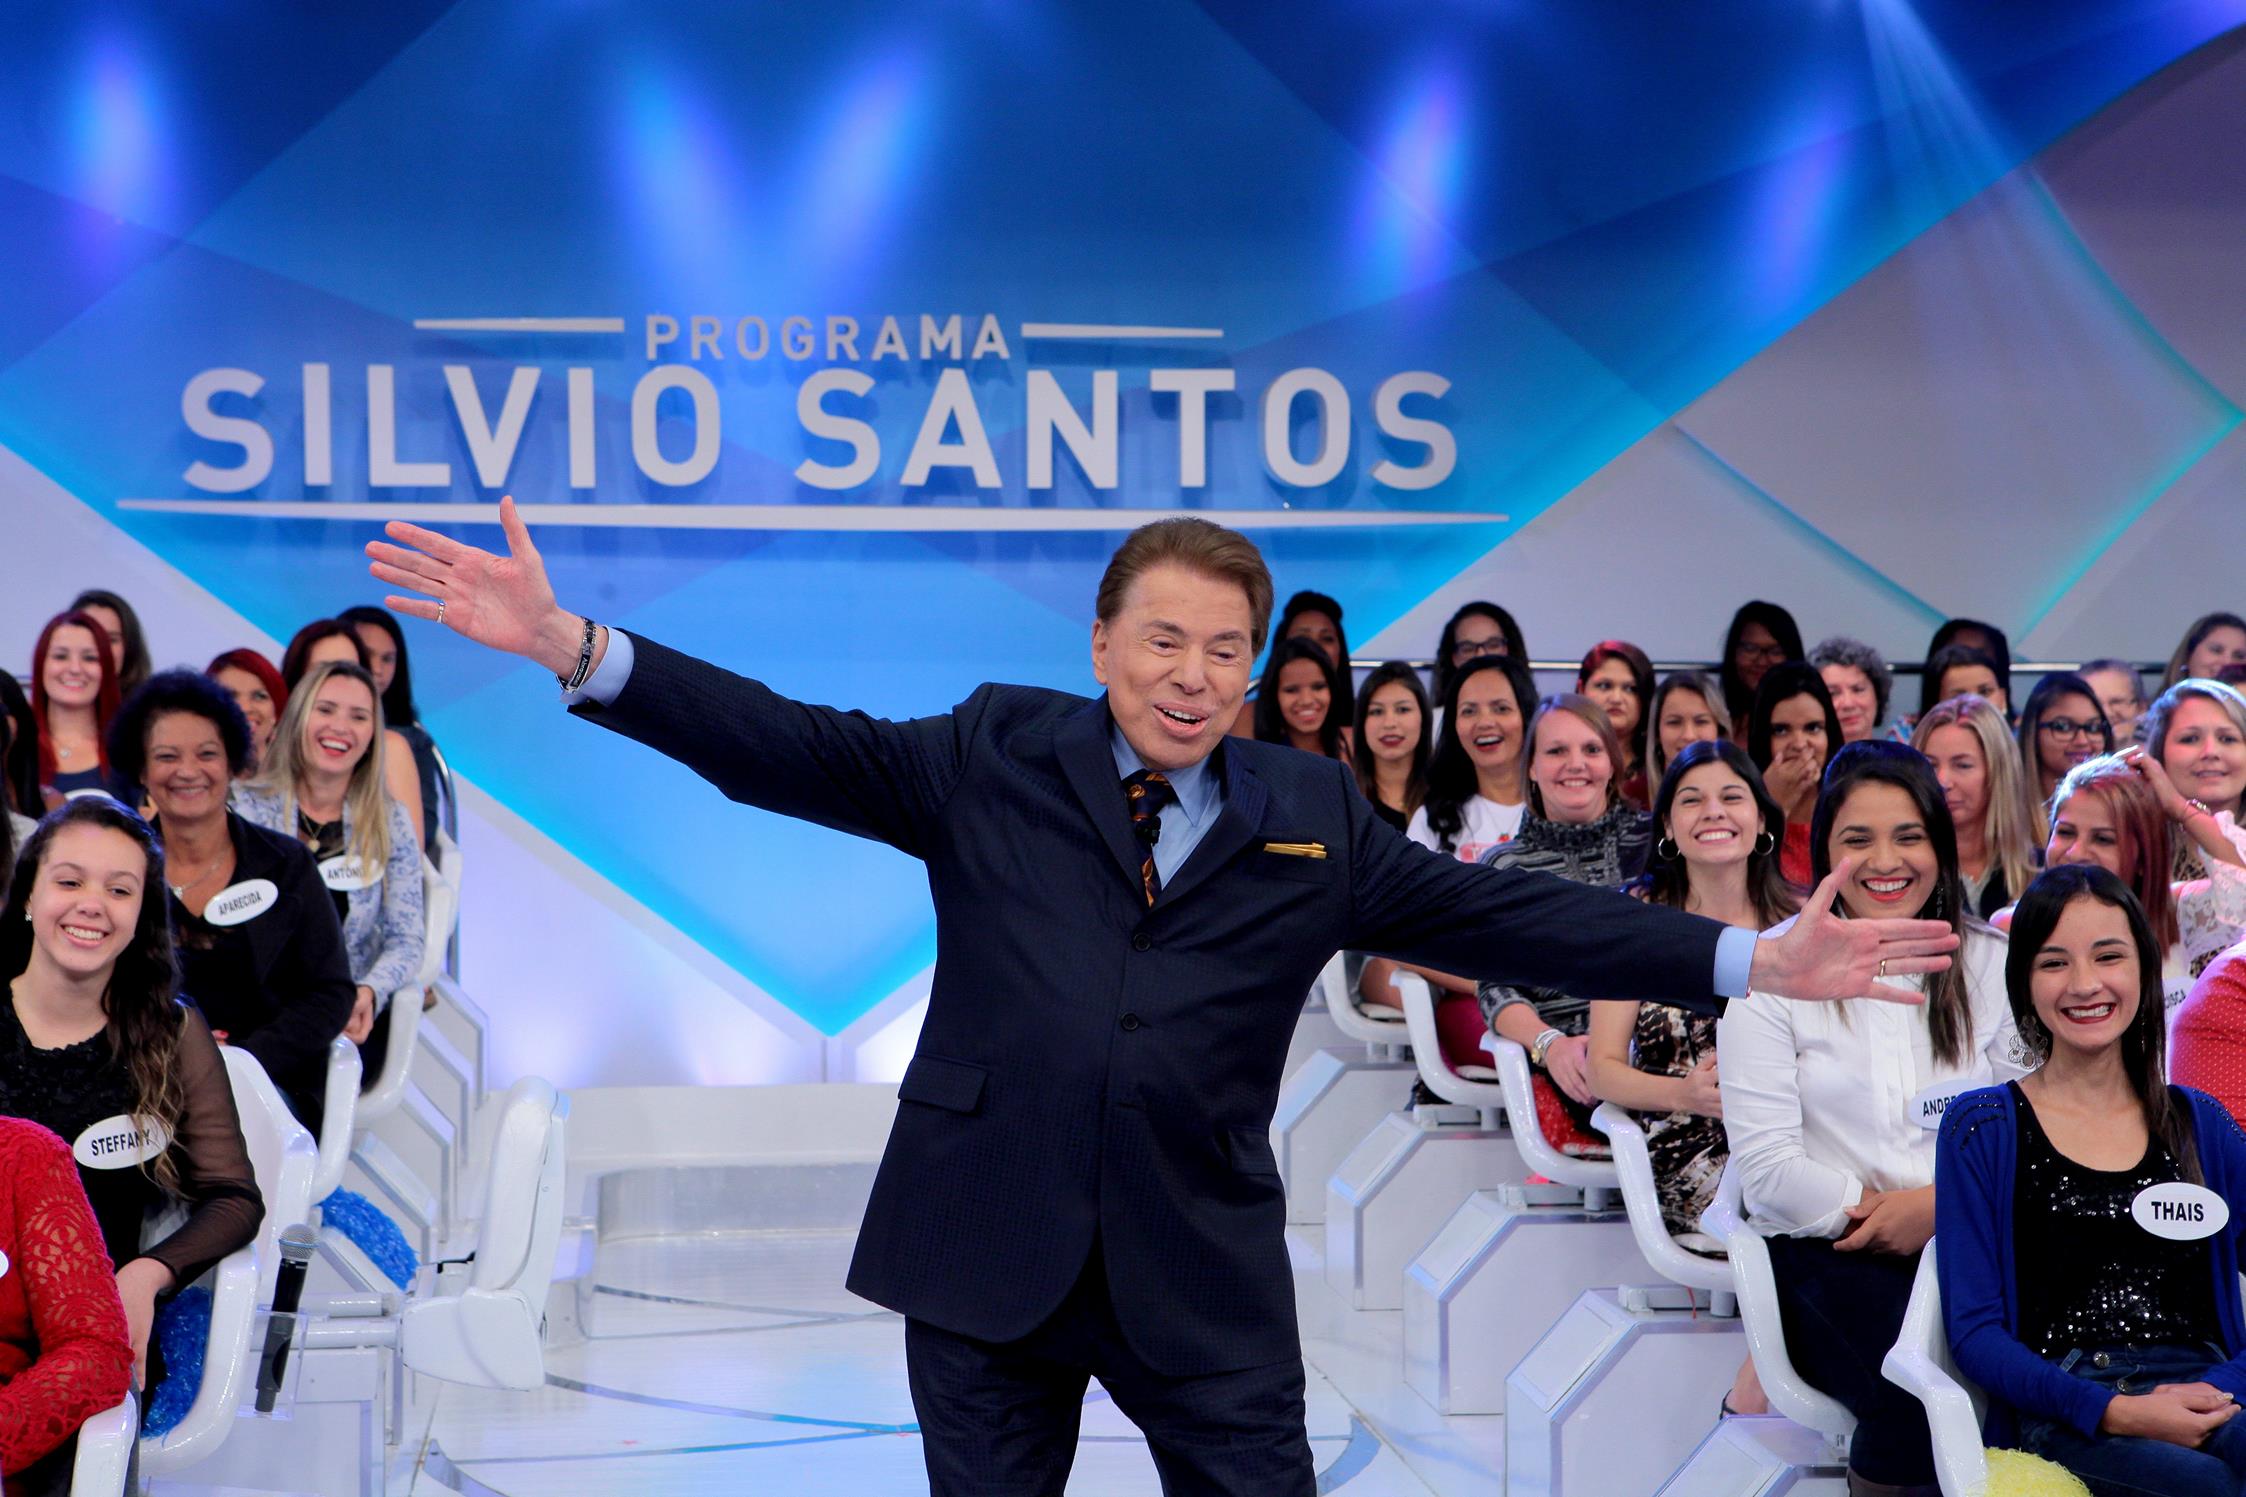 Programa Silvio Santos 53 anos